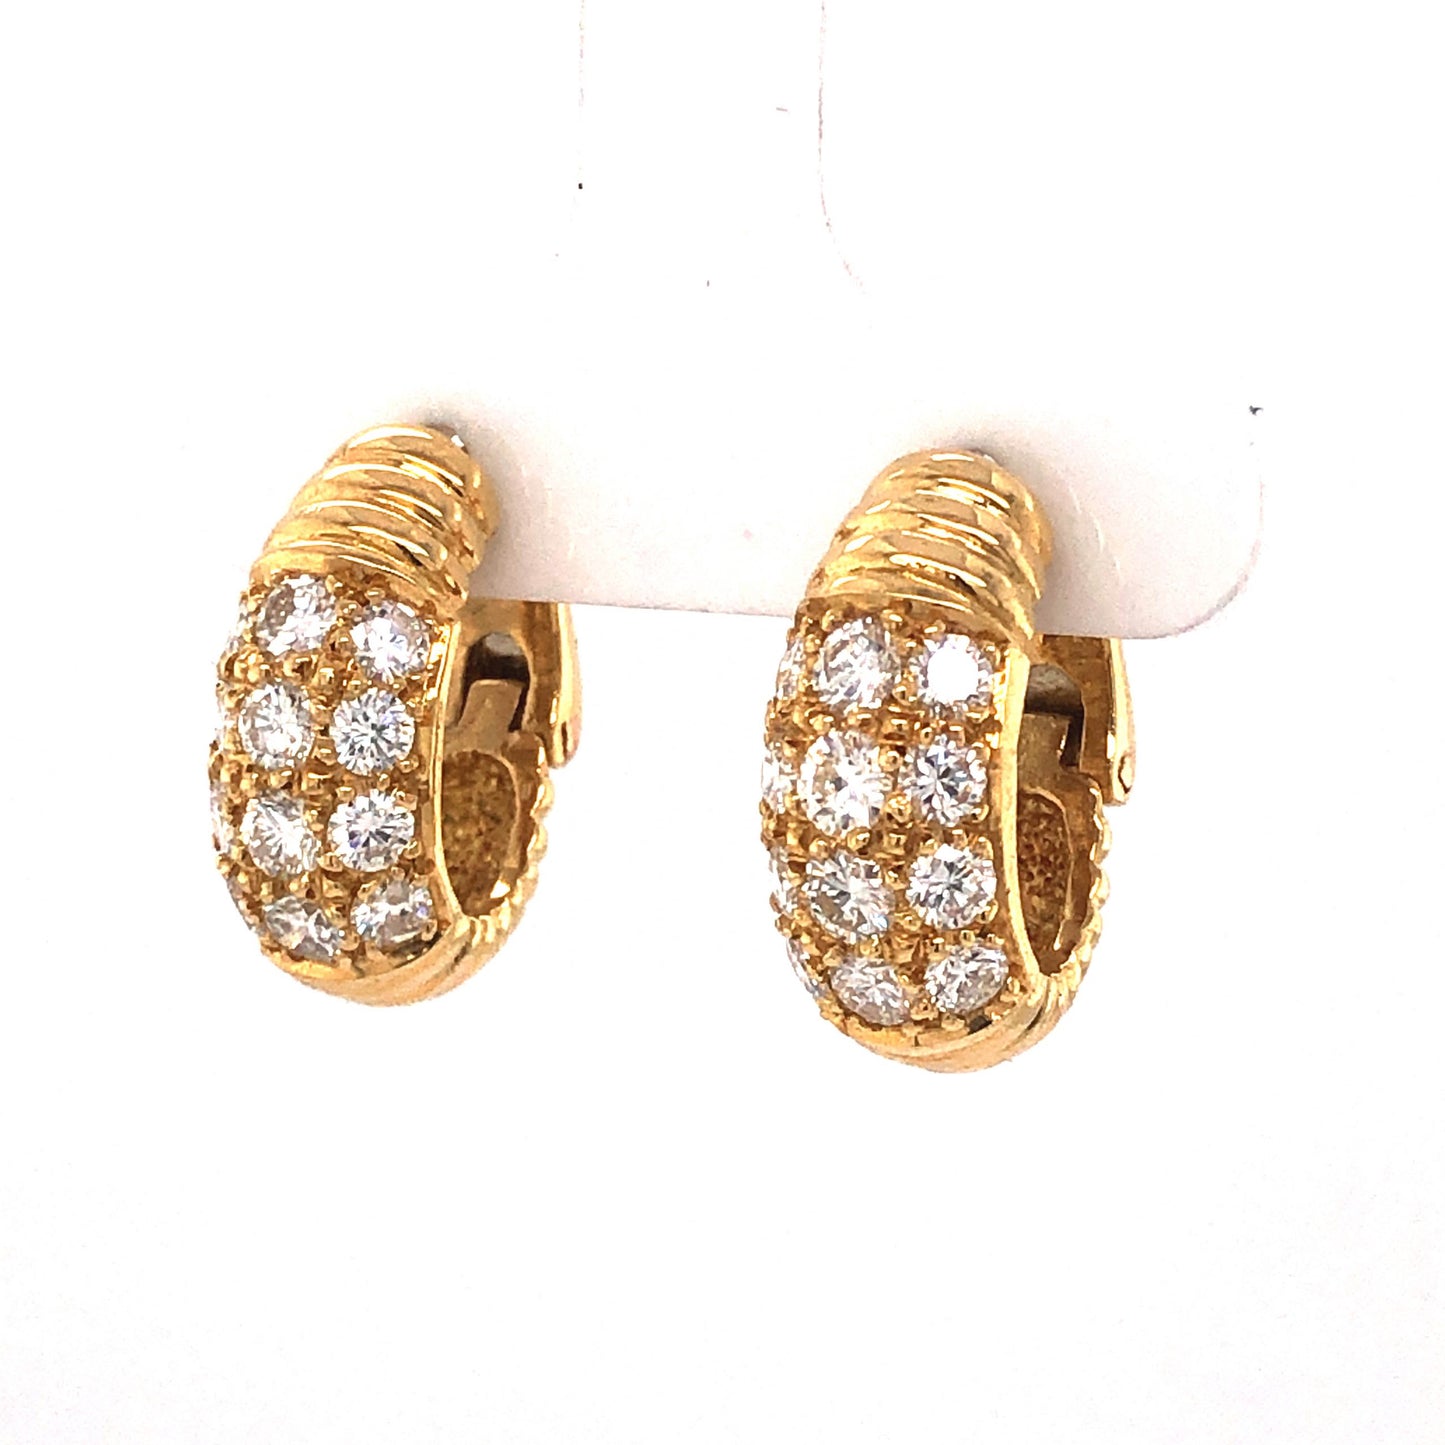 1.50 Round Brilliant Cut Diamond Earrings in 18k Yellow Gold